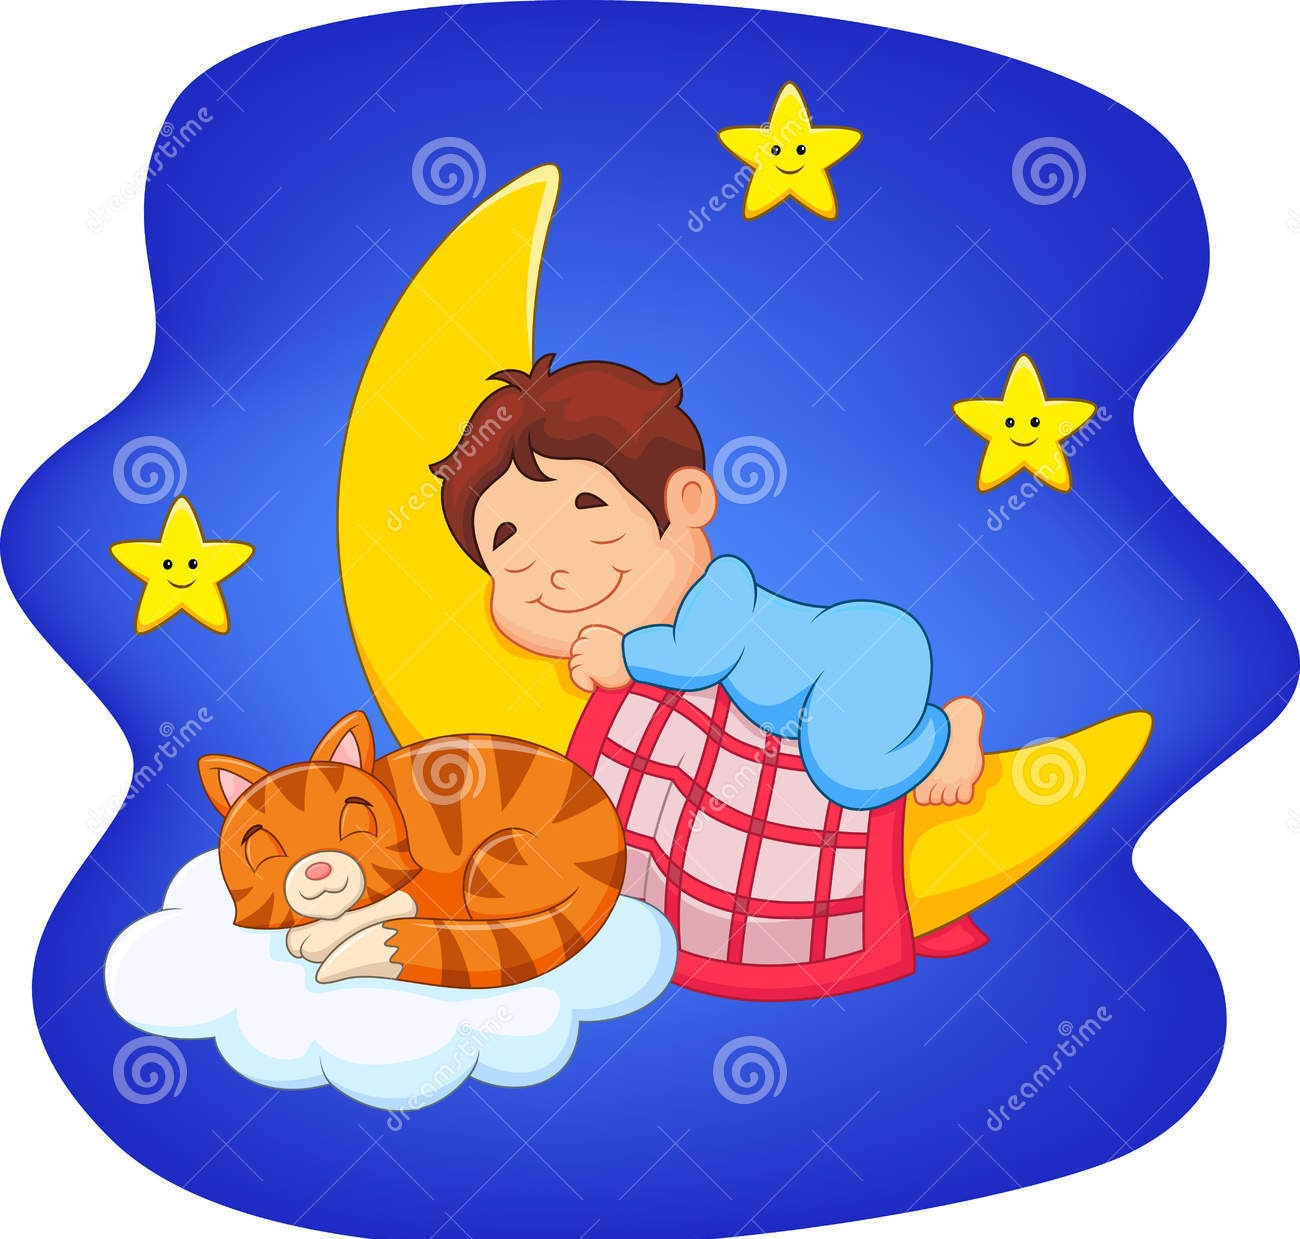 cute-little-boy-cat-sleeping-moon-illustration-61830700 edited.jpg